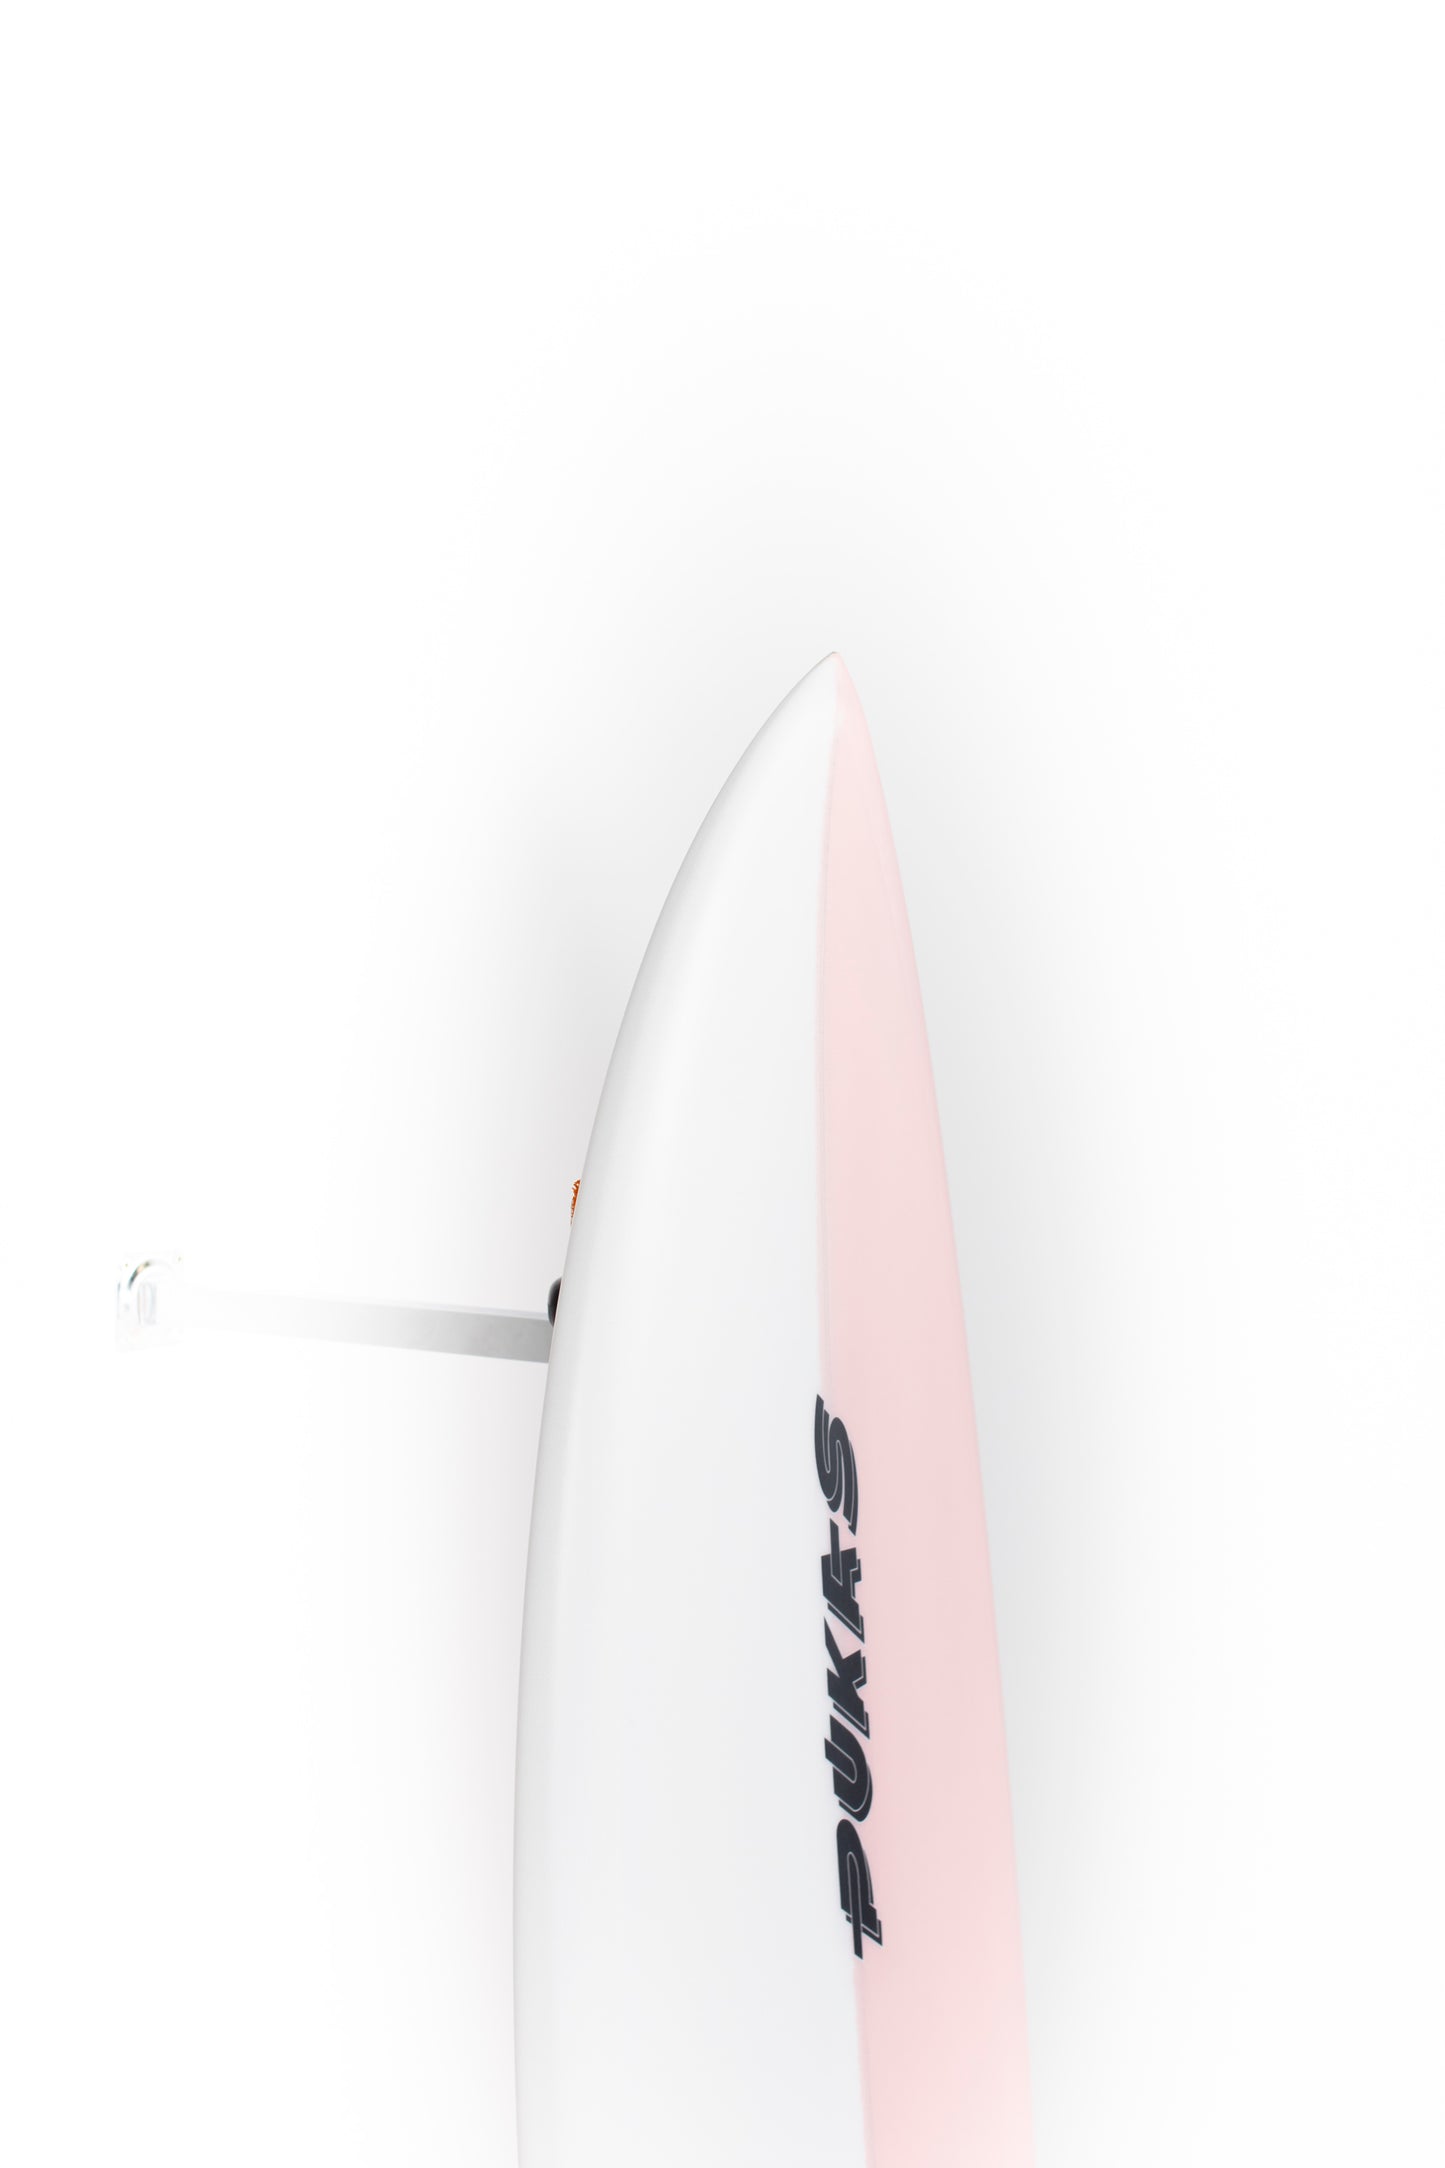 Pukas Surfboard - ORIGINAL 69 by Axel Lorentz - 5'4” x 19 x 2,13 